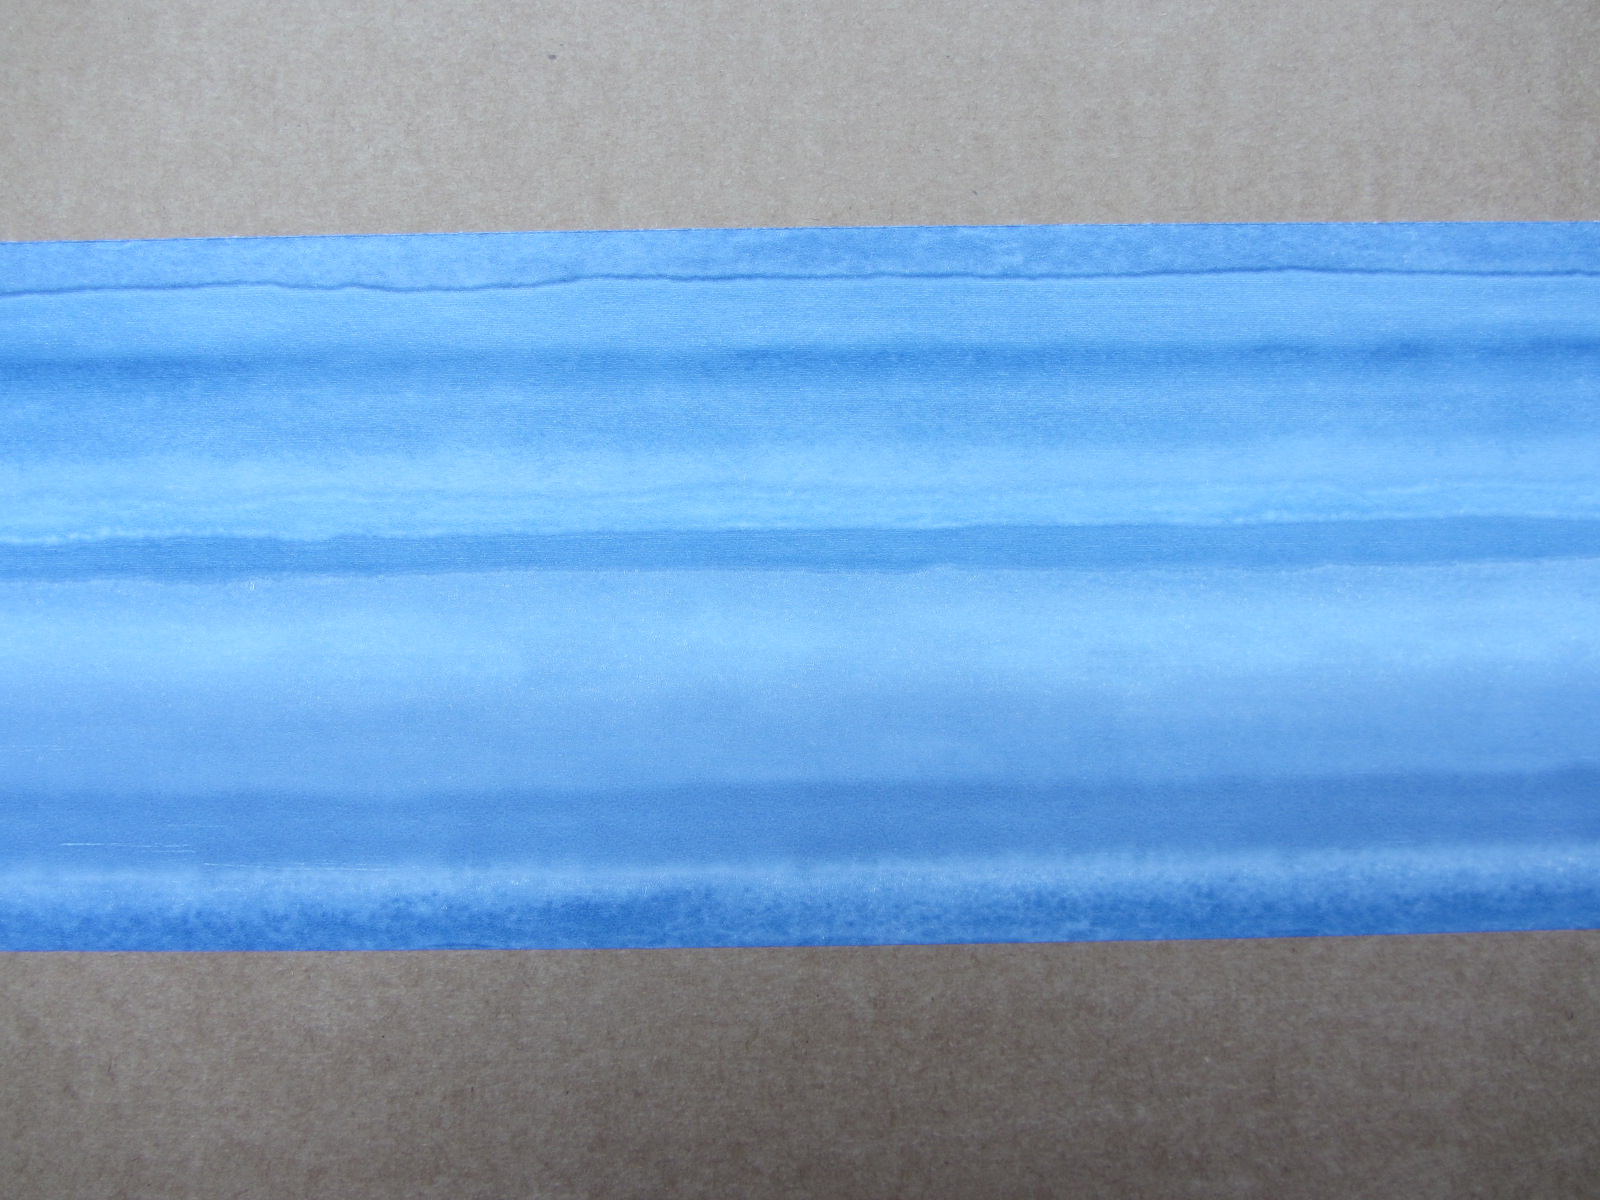 Shades Of Blue Wallpaper Border Self Adhesive Bedroom X